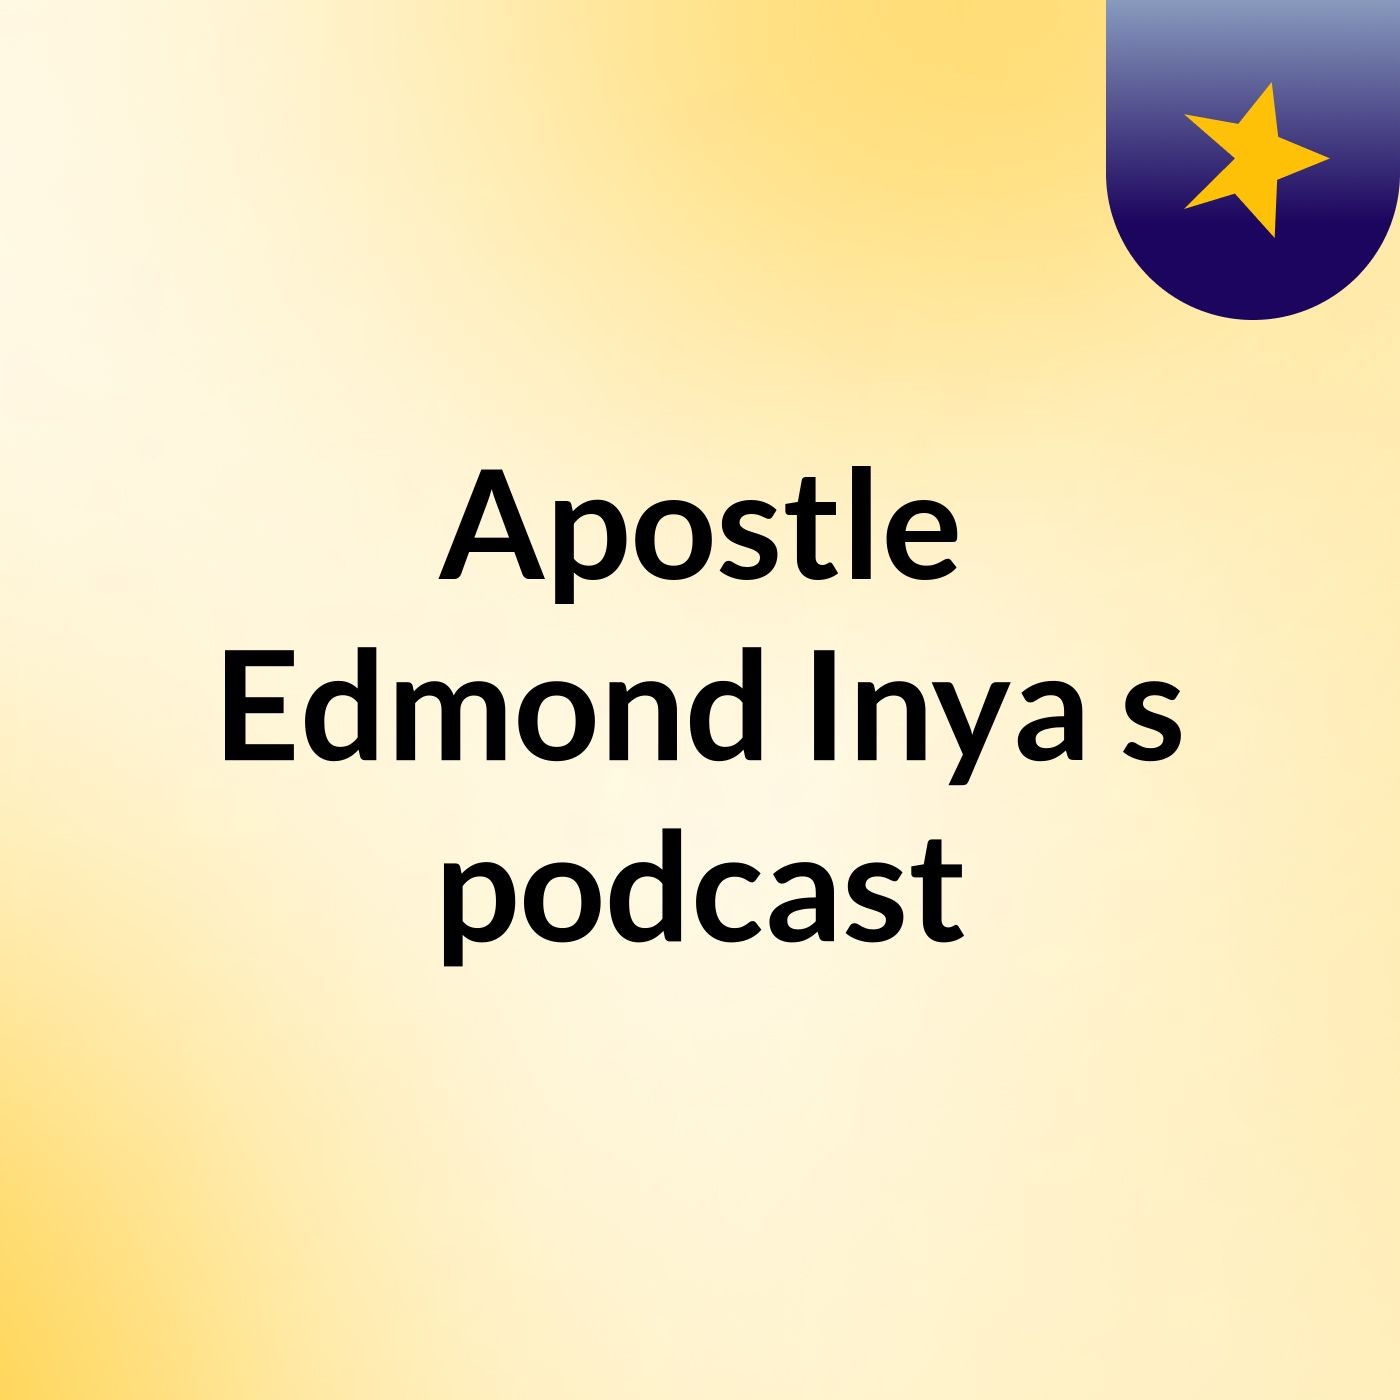 Episode 2 - Apostle Edmond Inya's podcast